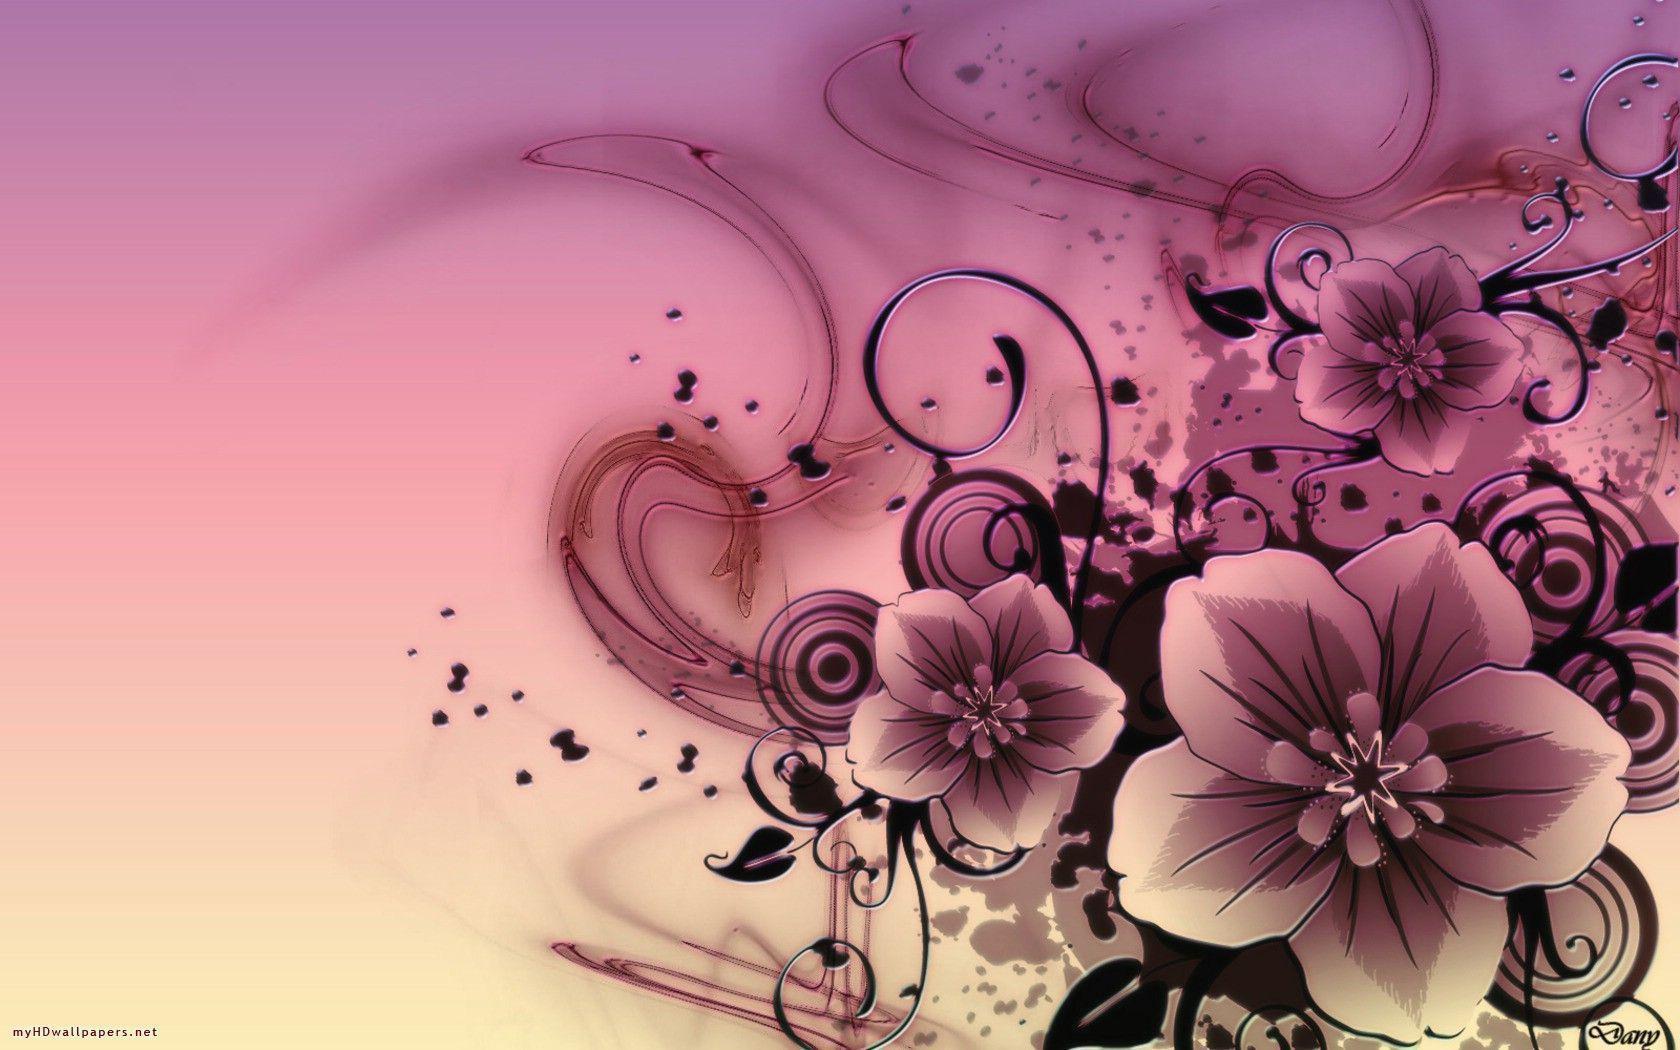 Wallpaper For > Pink Abstract Wallpaper For Desktop